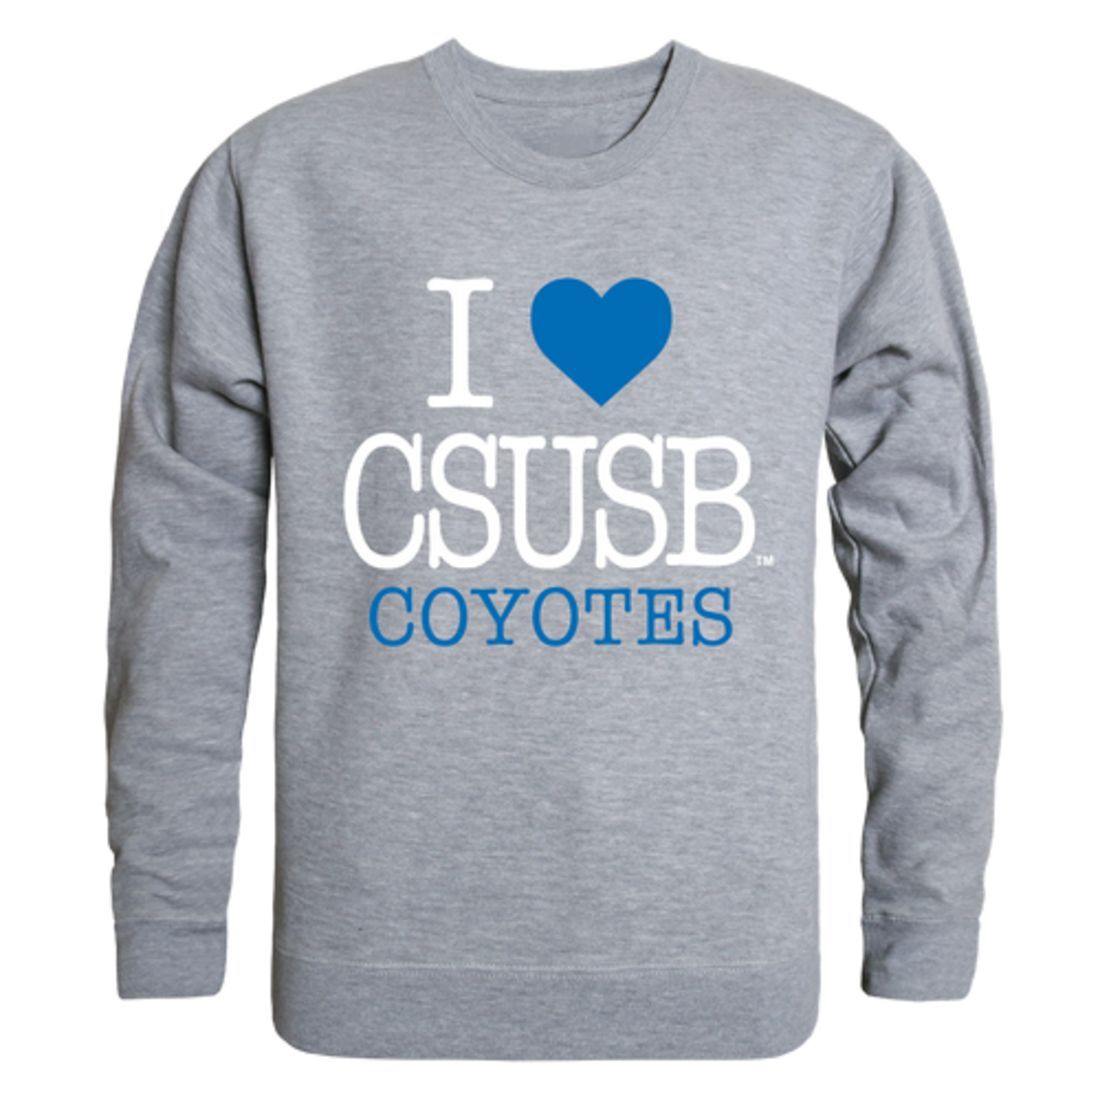 I Love CSUSB California State University San Bernardino Coyotes Crewneck Pullover Sweatshirt Sweater-Campus-Wardrobe